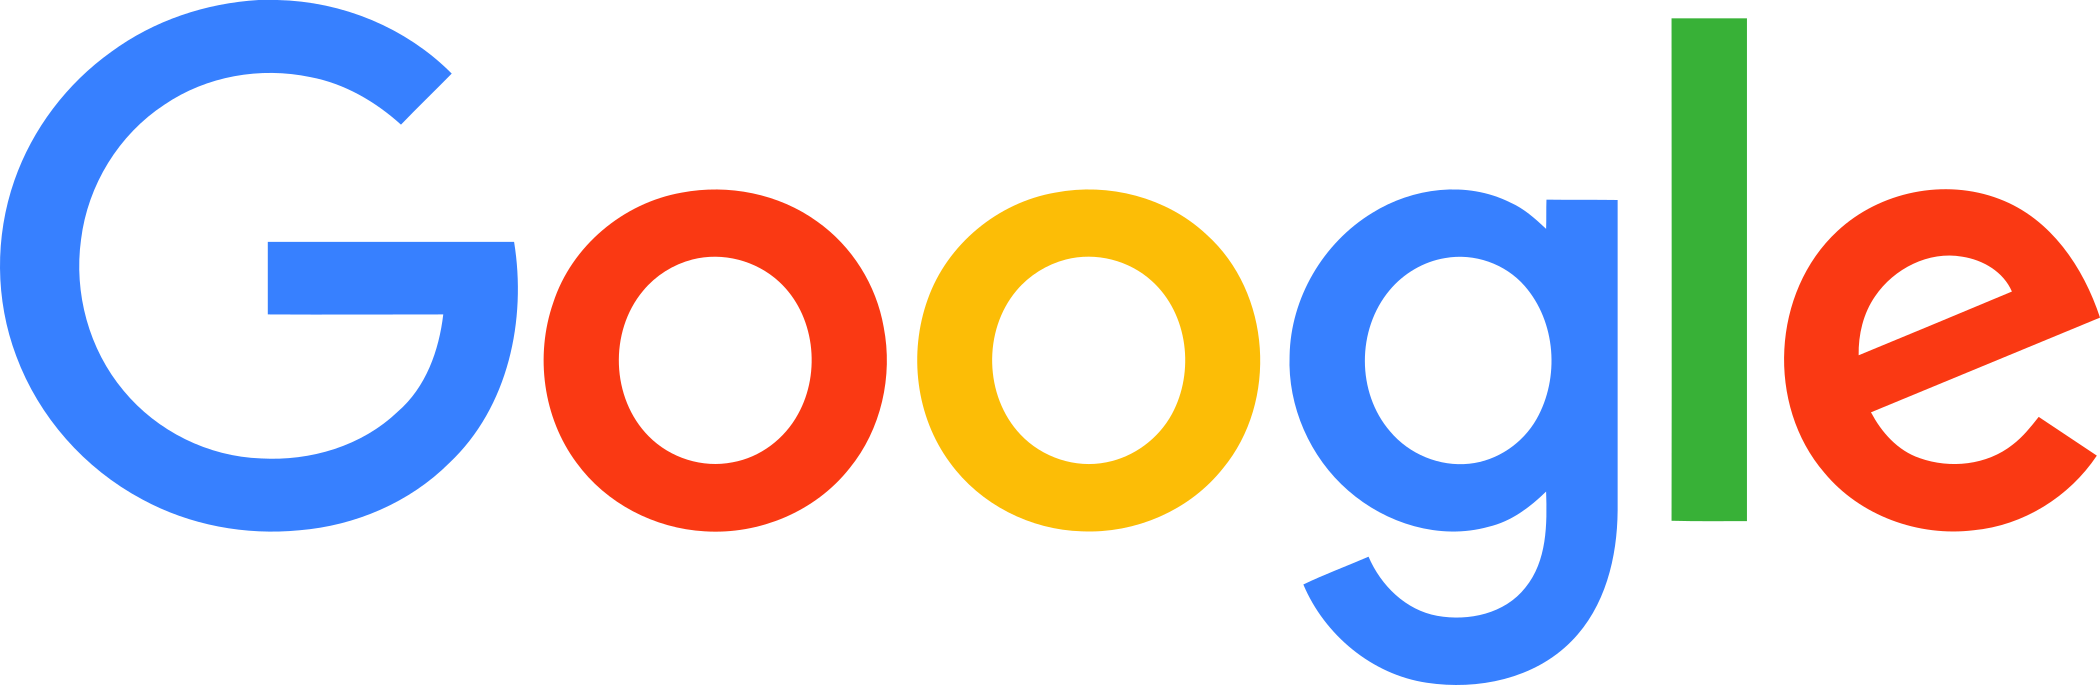 google logo 1 1 - Google Logo